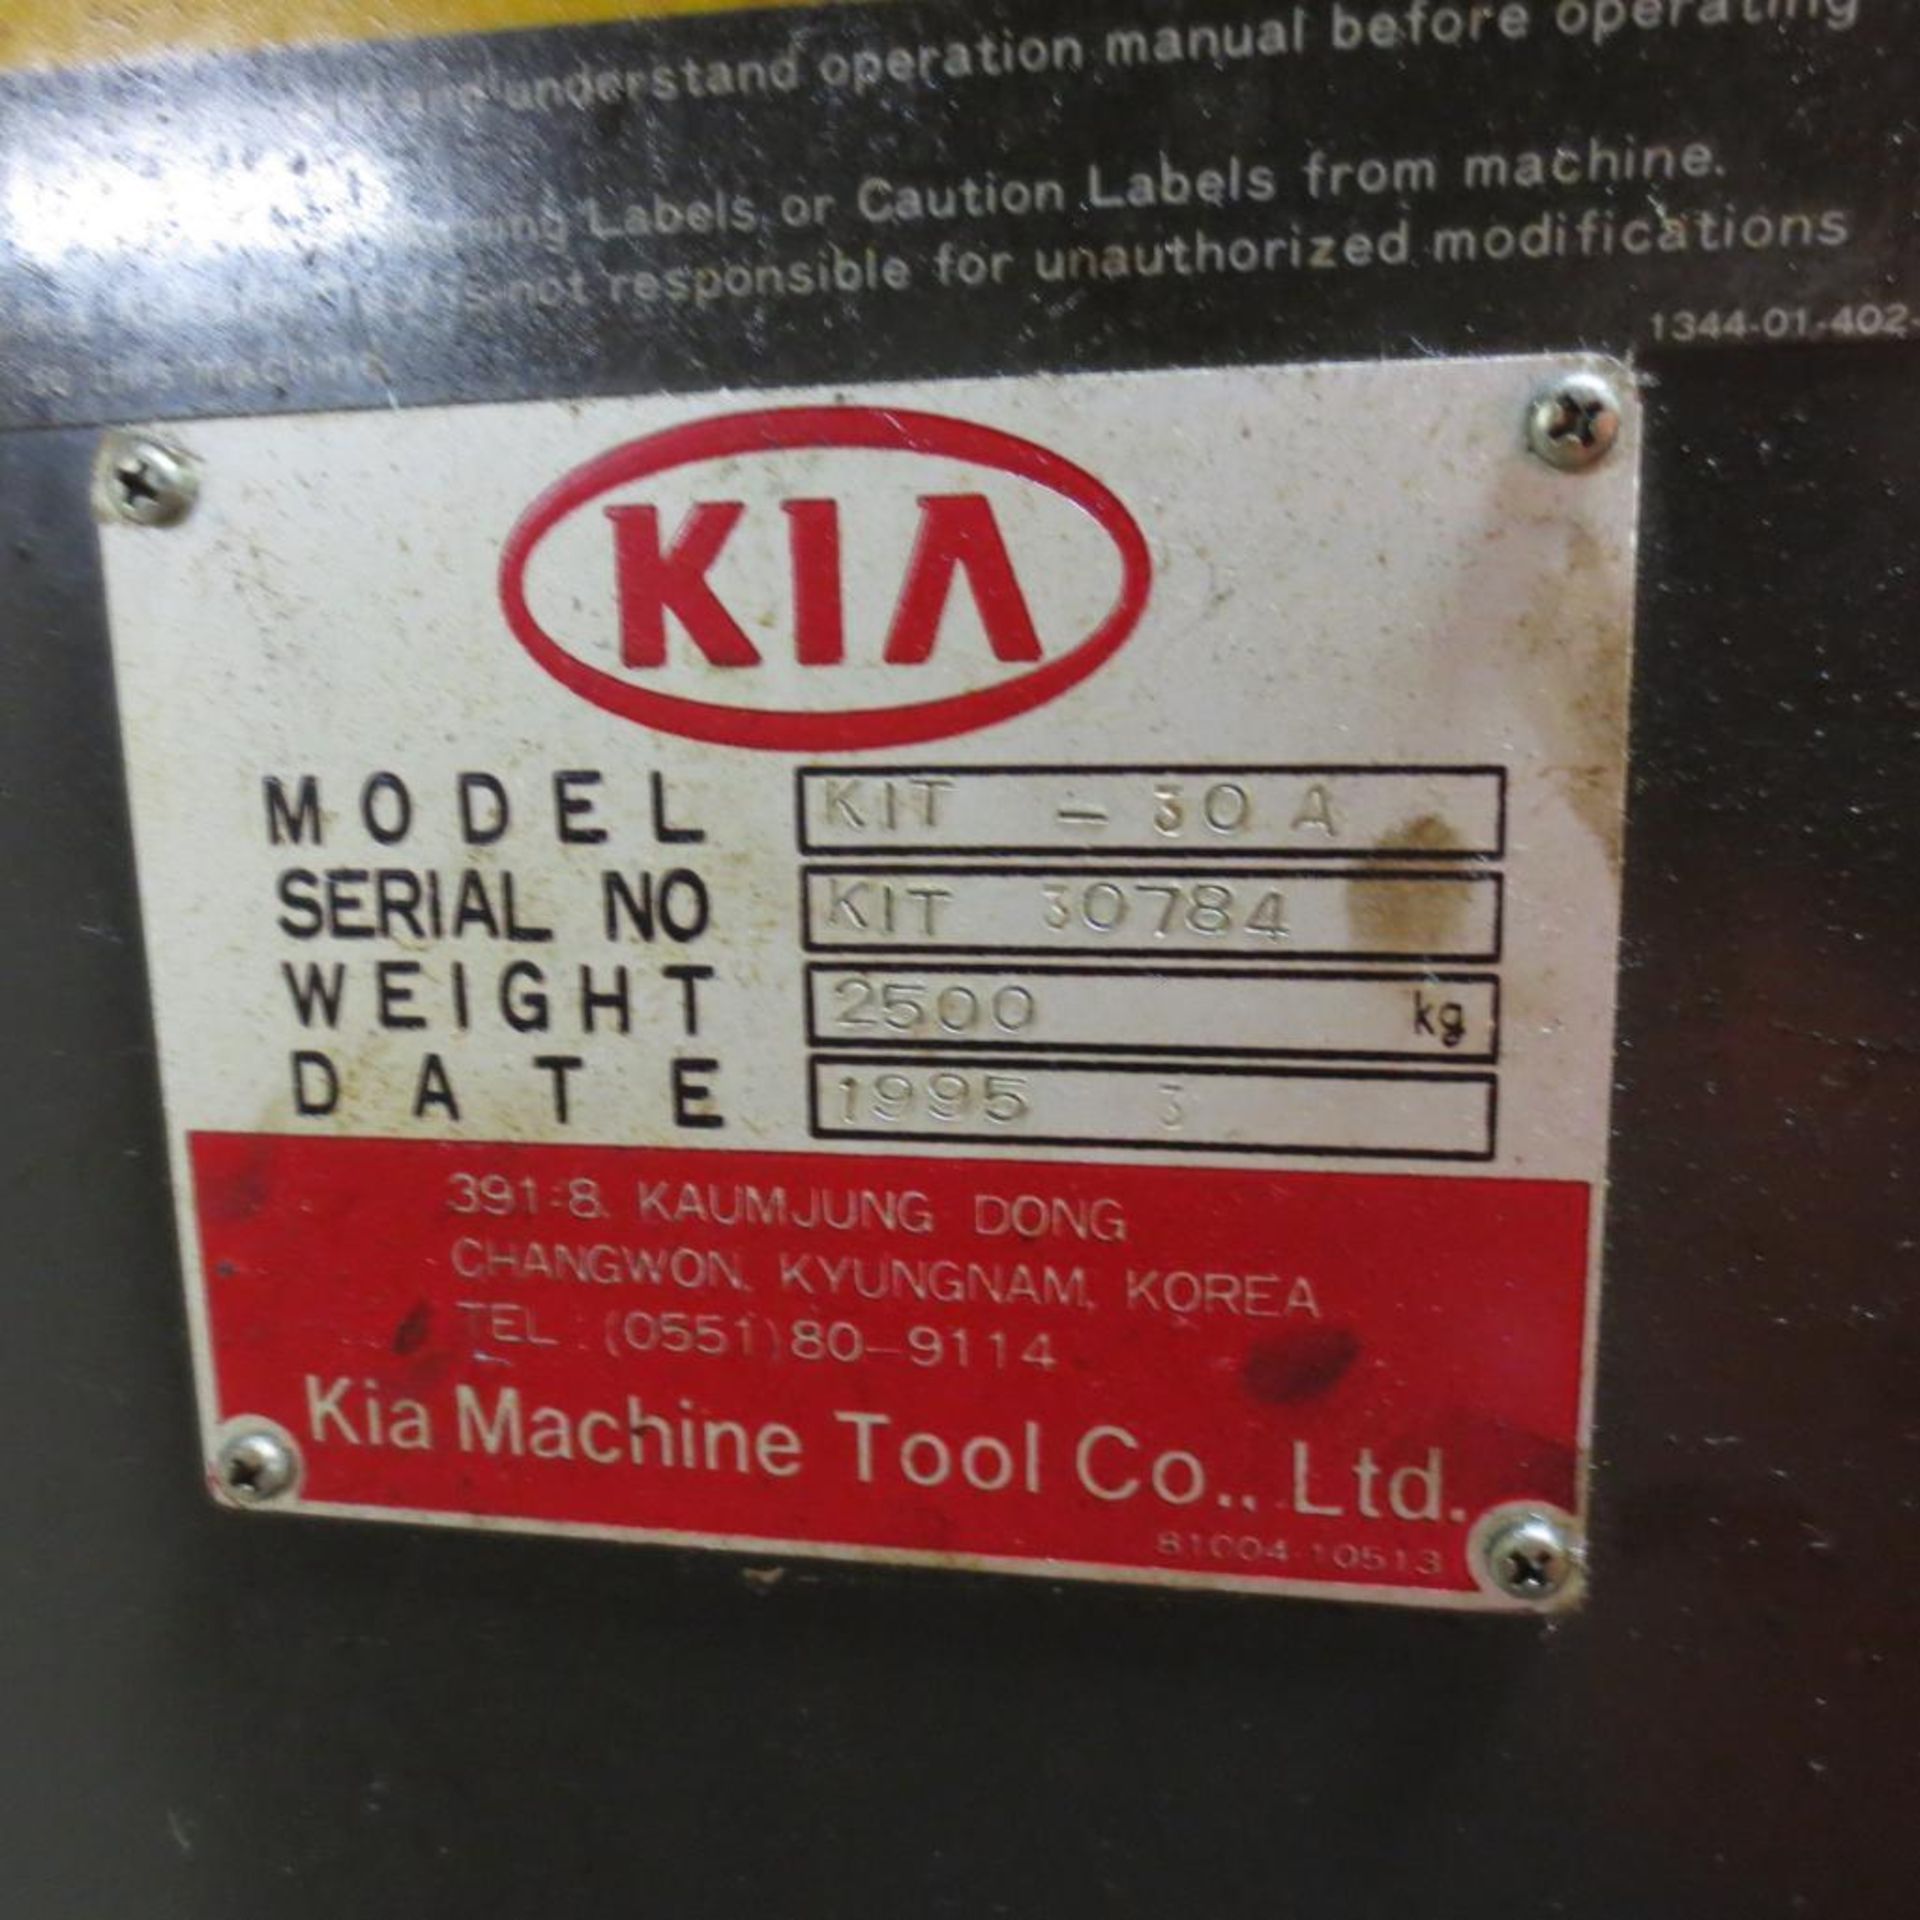 KIA Kit 30A LX3 Best Economical CNC Lathe, S/N Kit30784, Year 1995. Loading Fee is $450.00 - Image 8 of 8